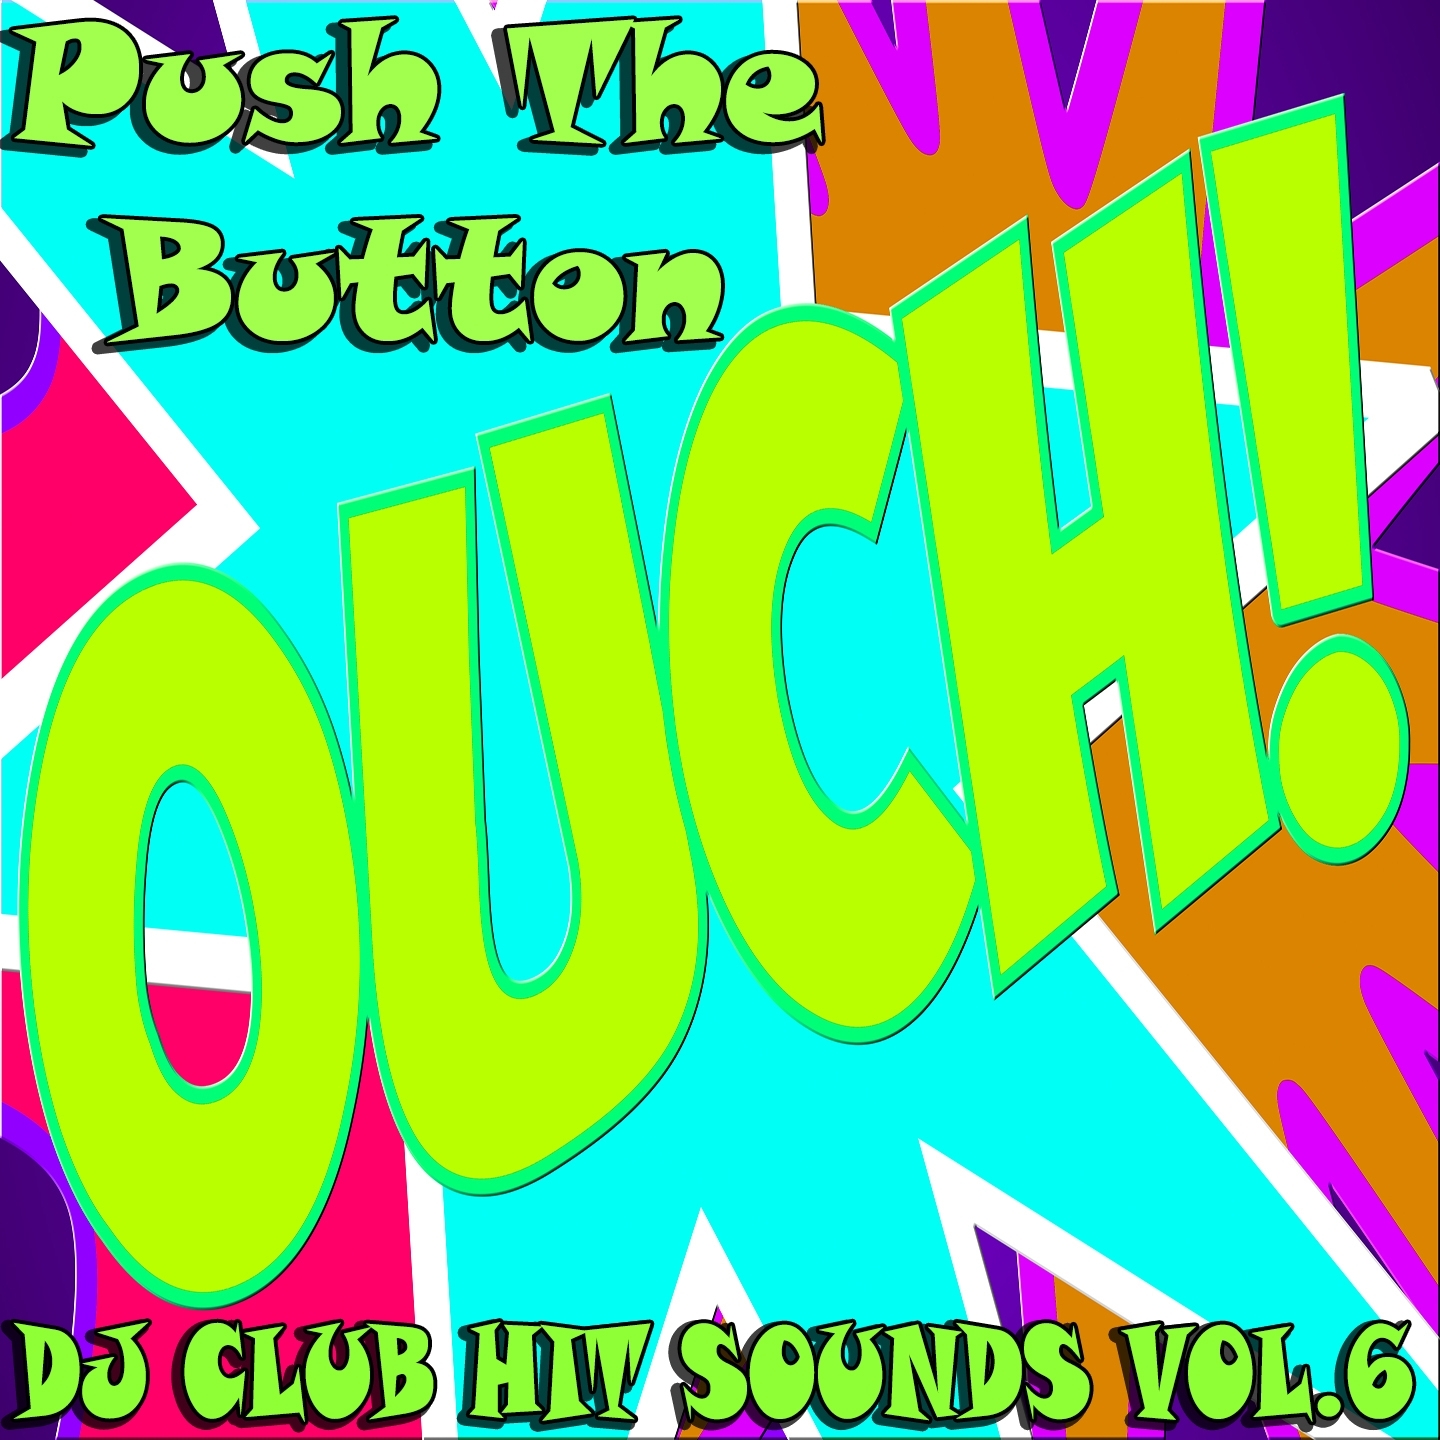 Push The Button, DJ Club Hit Sounds, Vol. 6